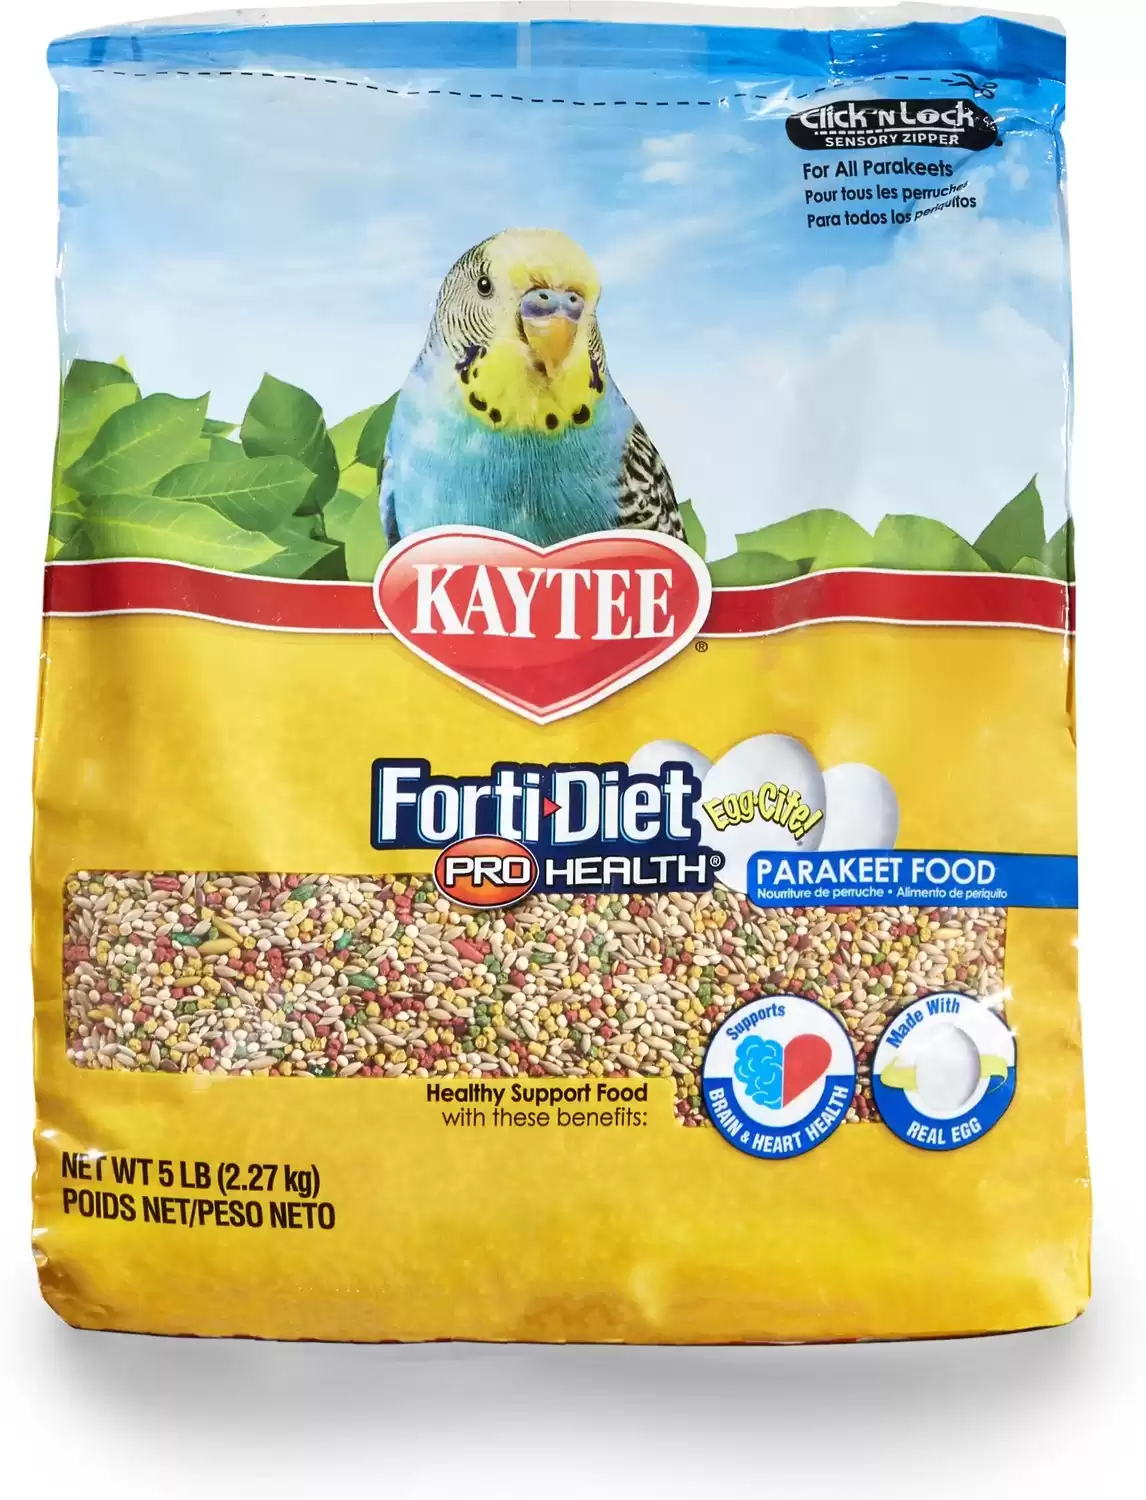 Kaytee Egg-Cite! Forti-Diet Pro Health Parakeet Food